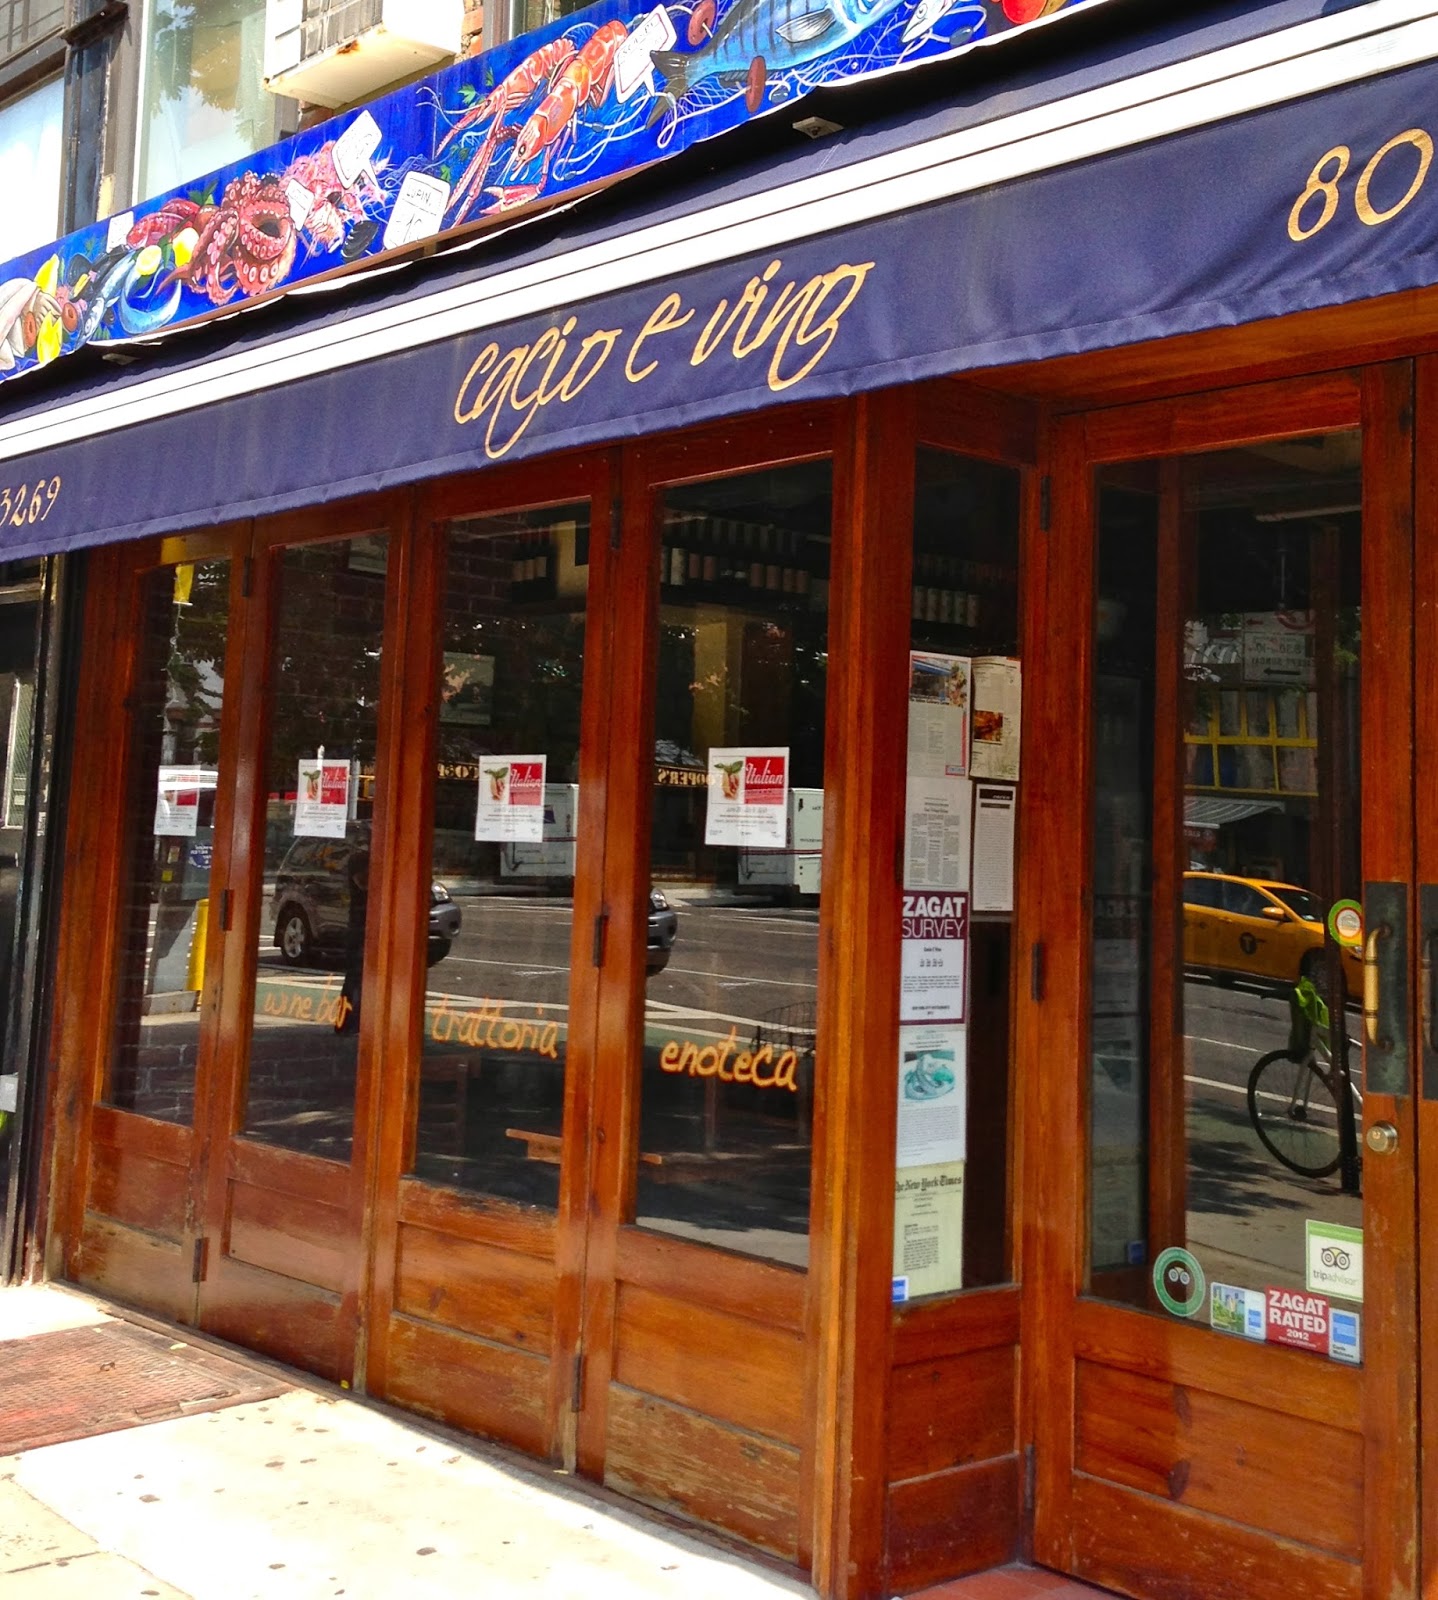 Photo of Cacio E Vino in New York City, New York, United States - 1 Picture of Restaurant, Food, Point of interest, Establishment, Bar